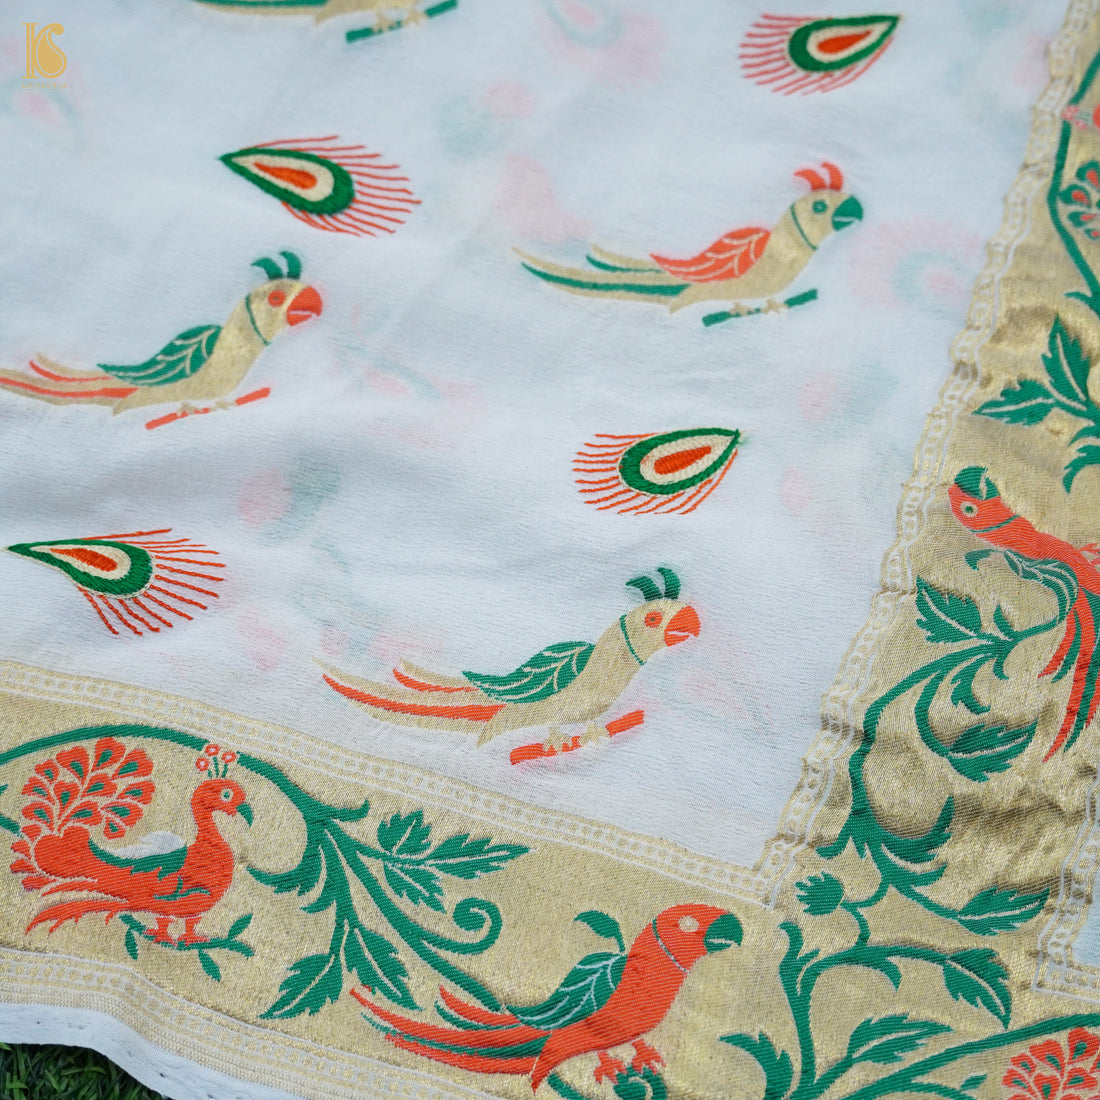 Handloom Banarasi Georgette Meenakari Parrot Dupatta with Resham Embroidery - Khinkhwab